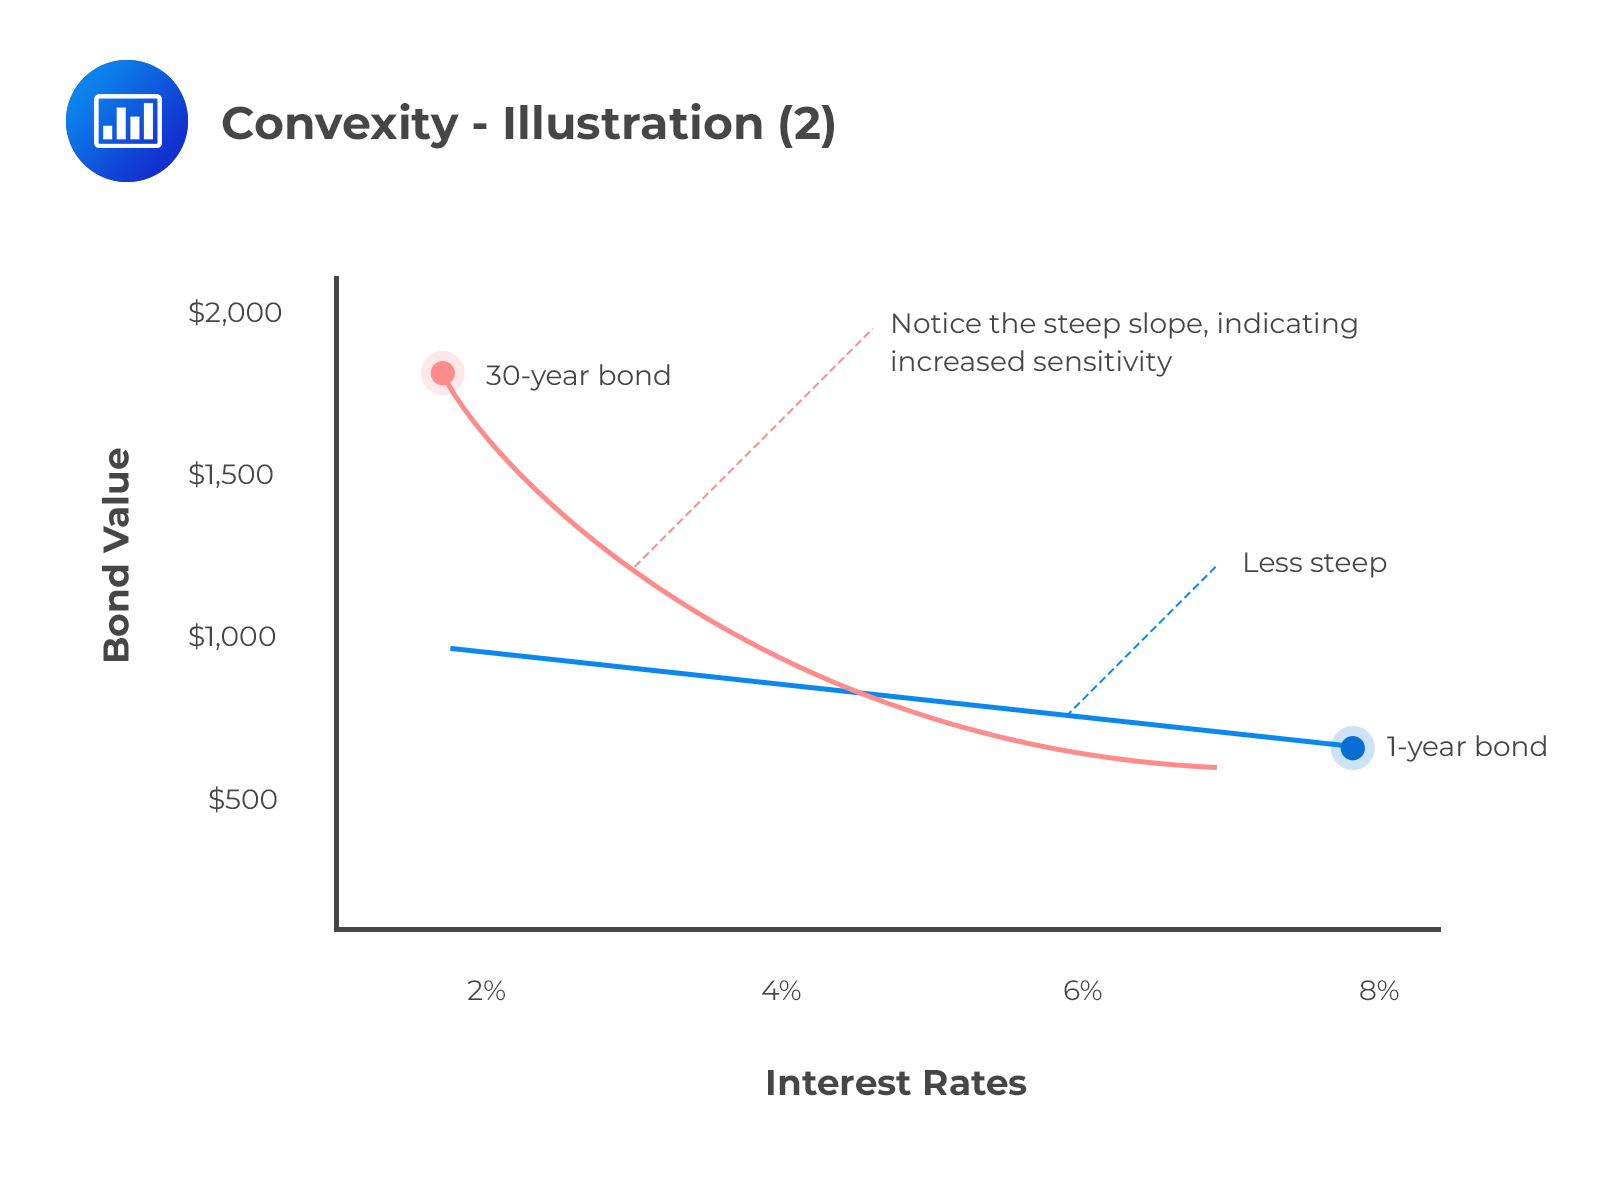 Convexity - Illustration (2)